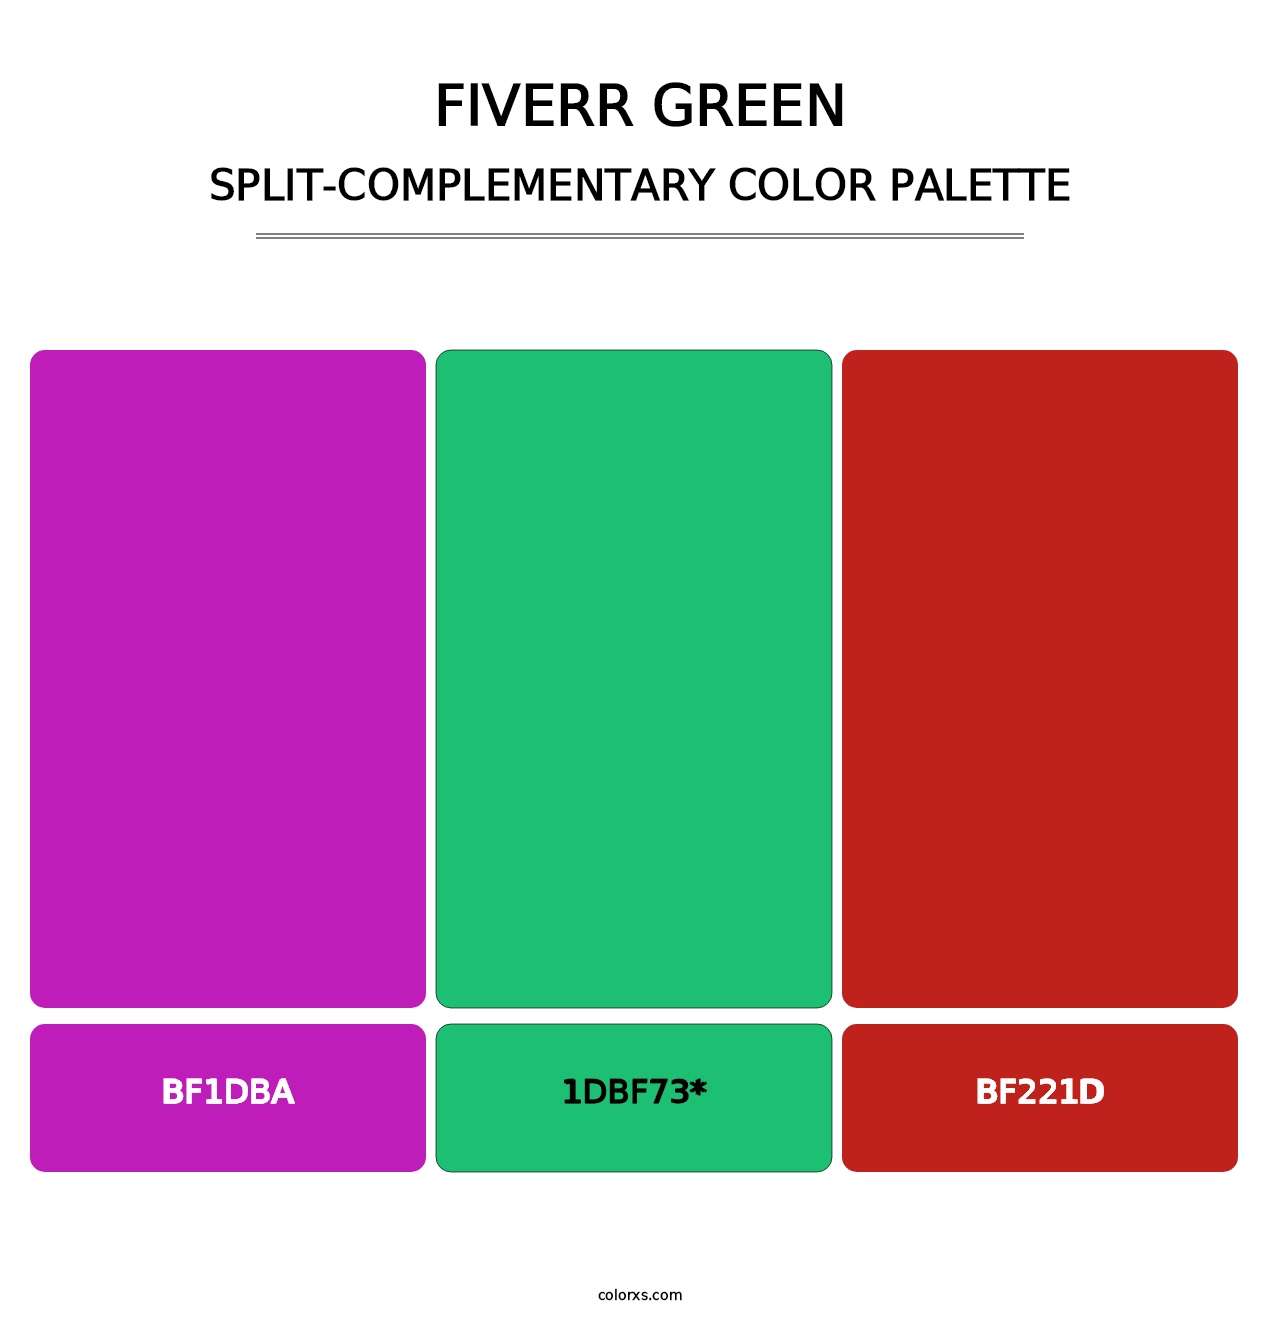 Fiverr Green - Split-Complementary Color Palette